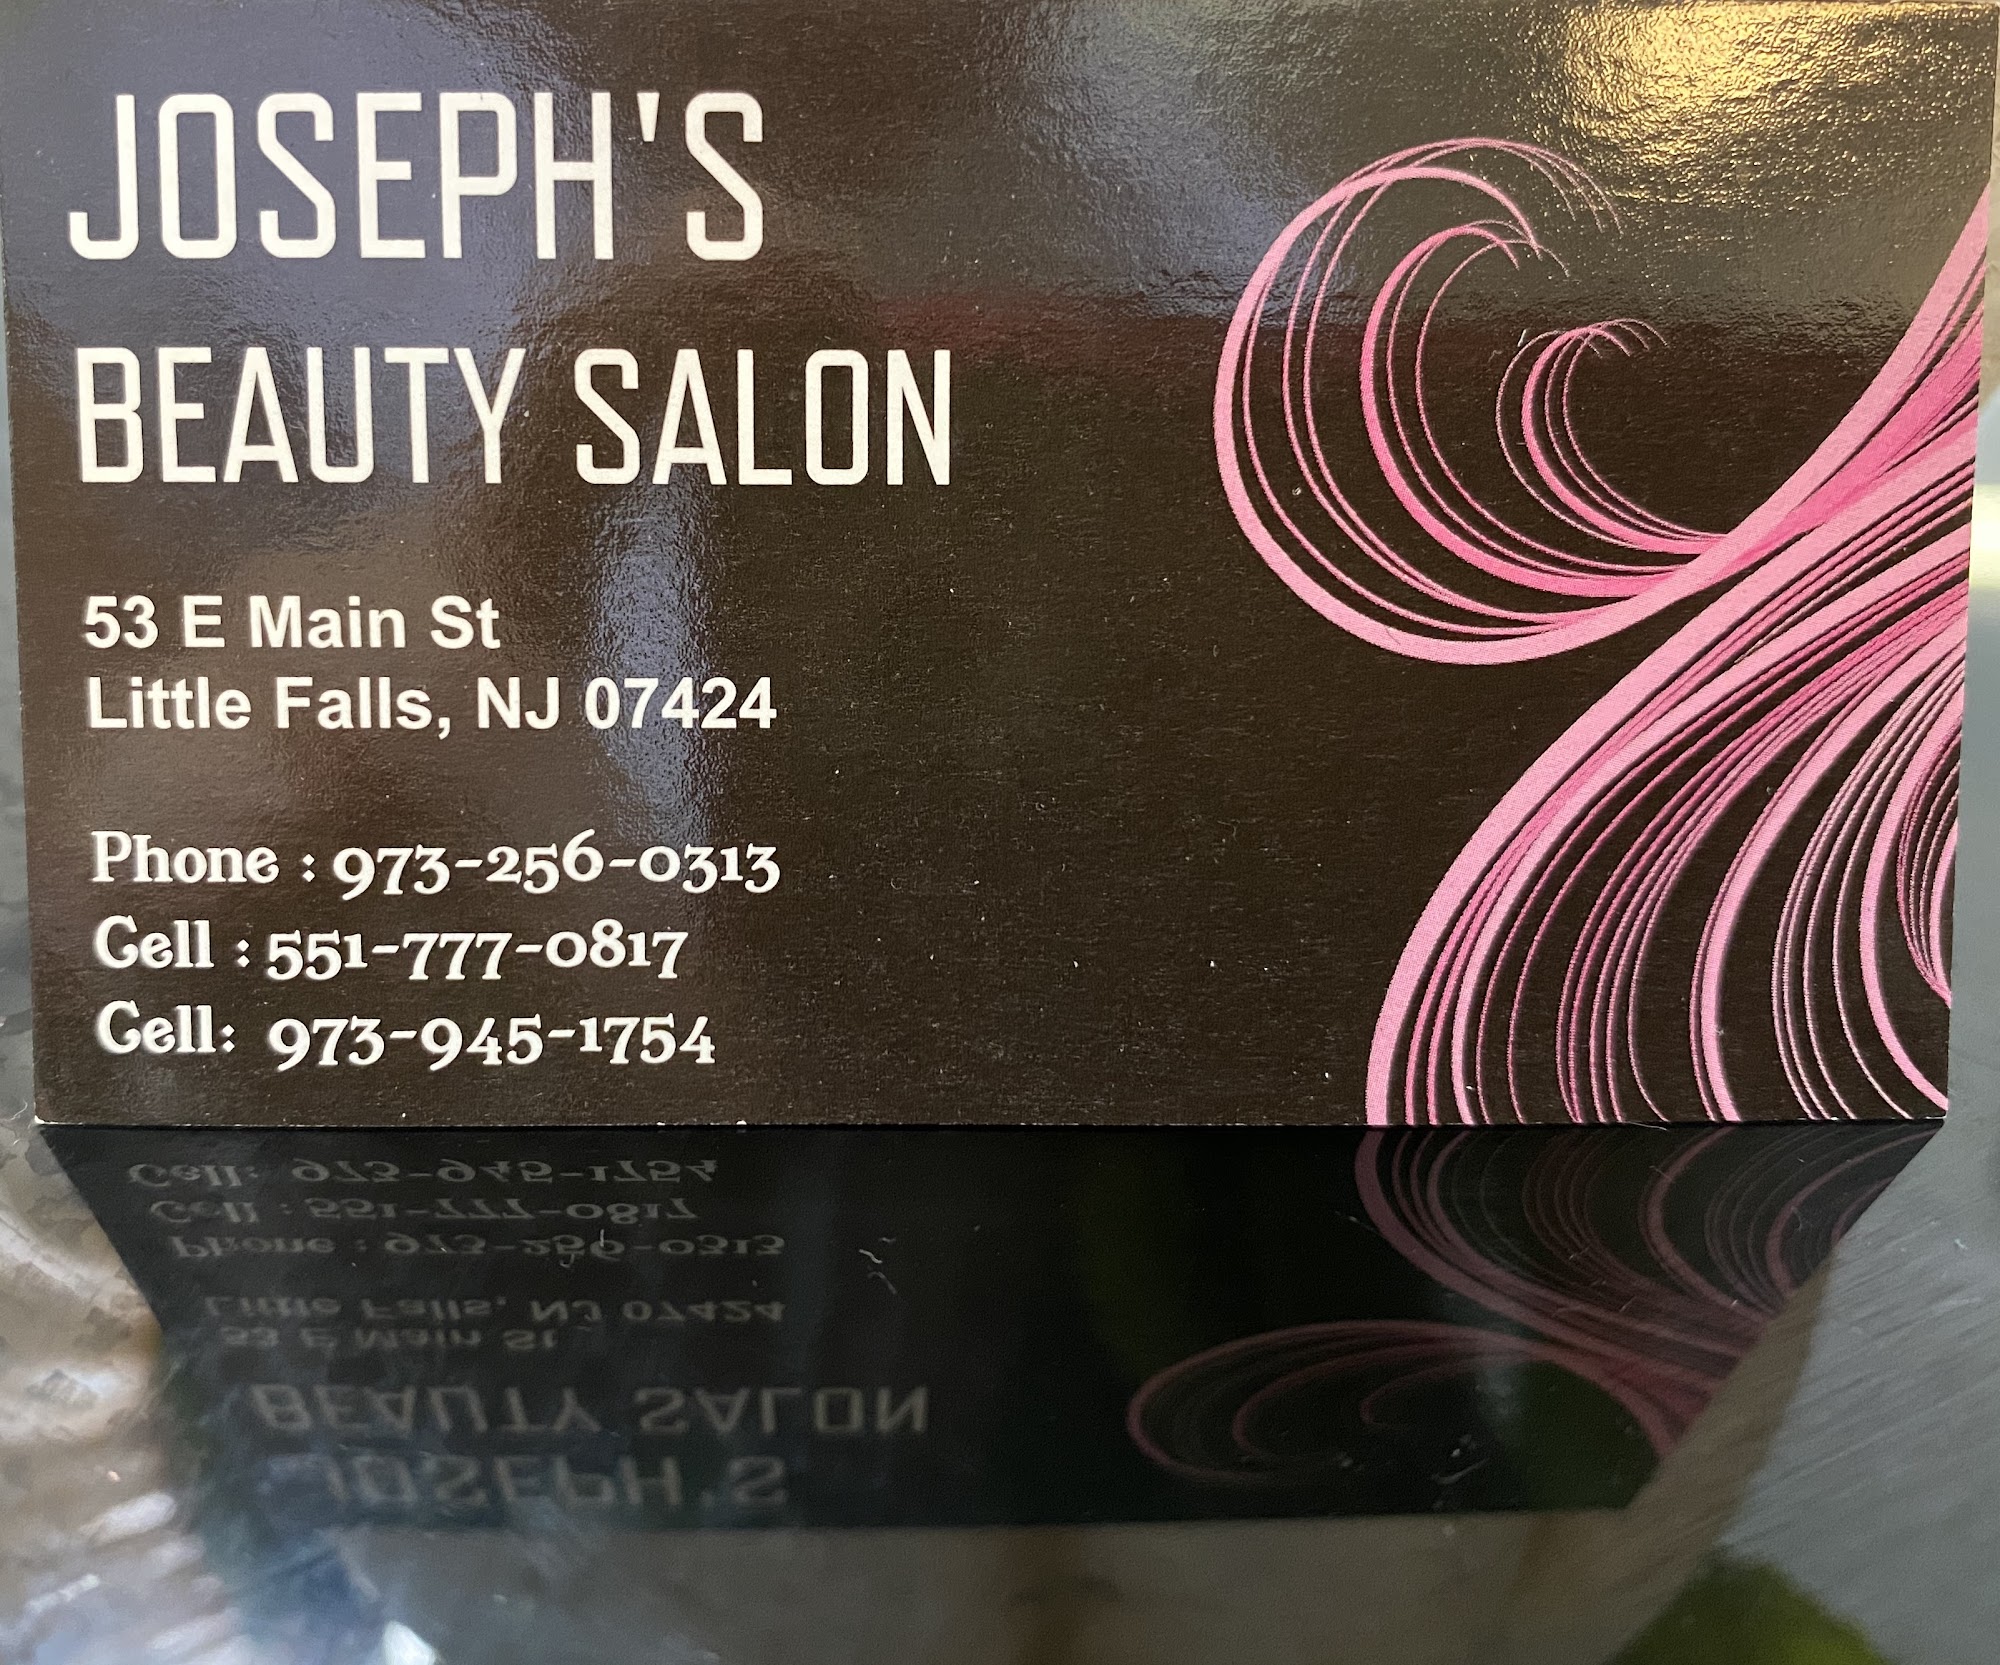 Joseph's Beauty Salon